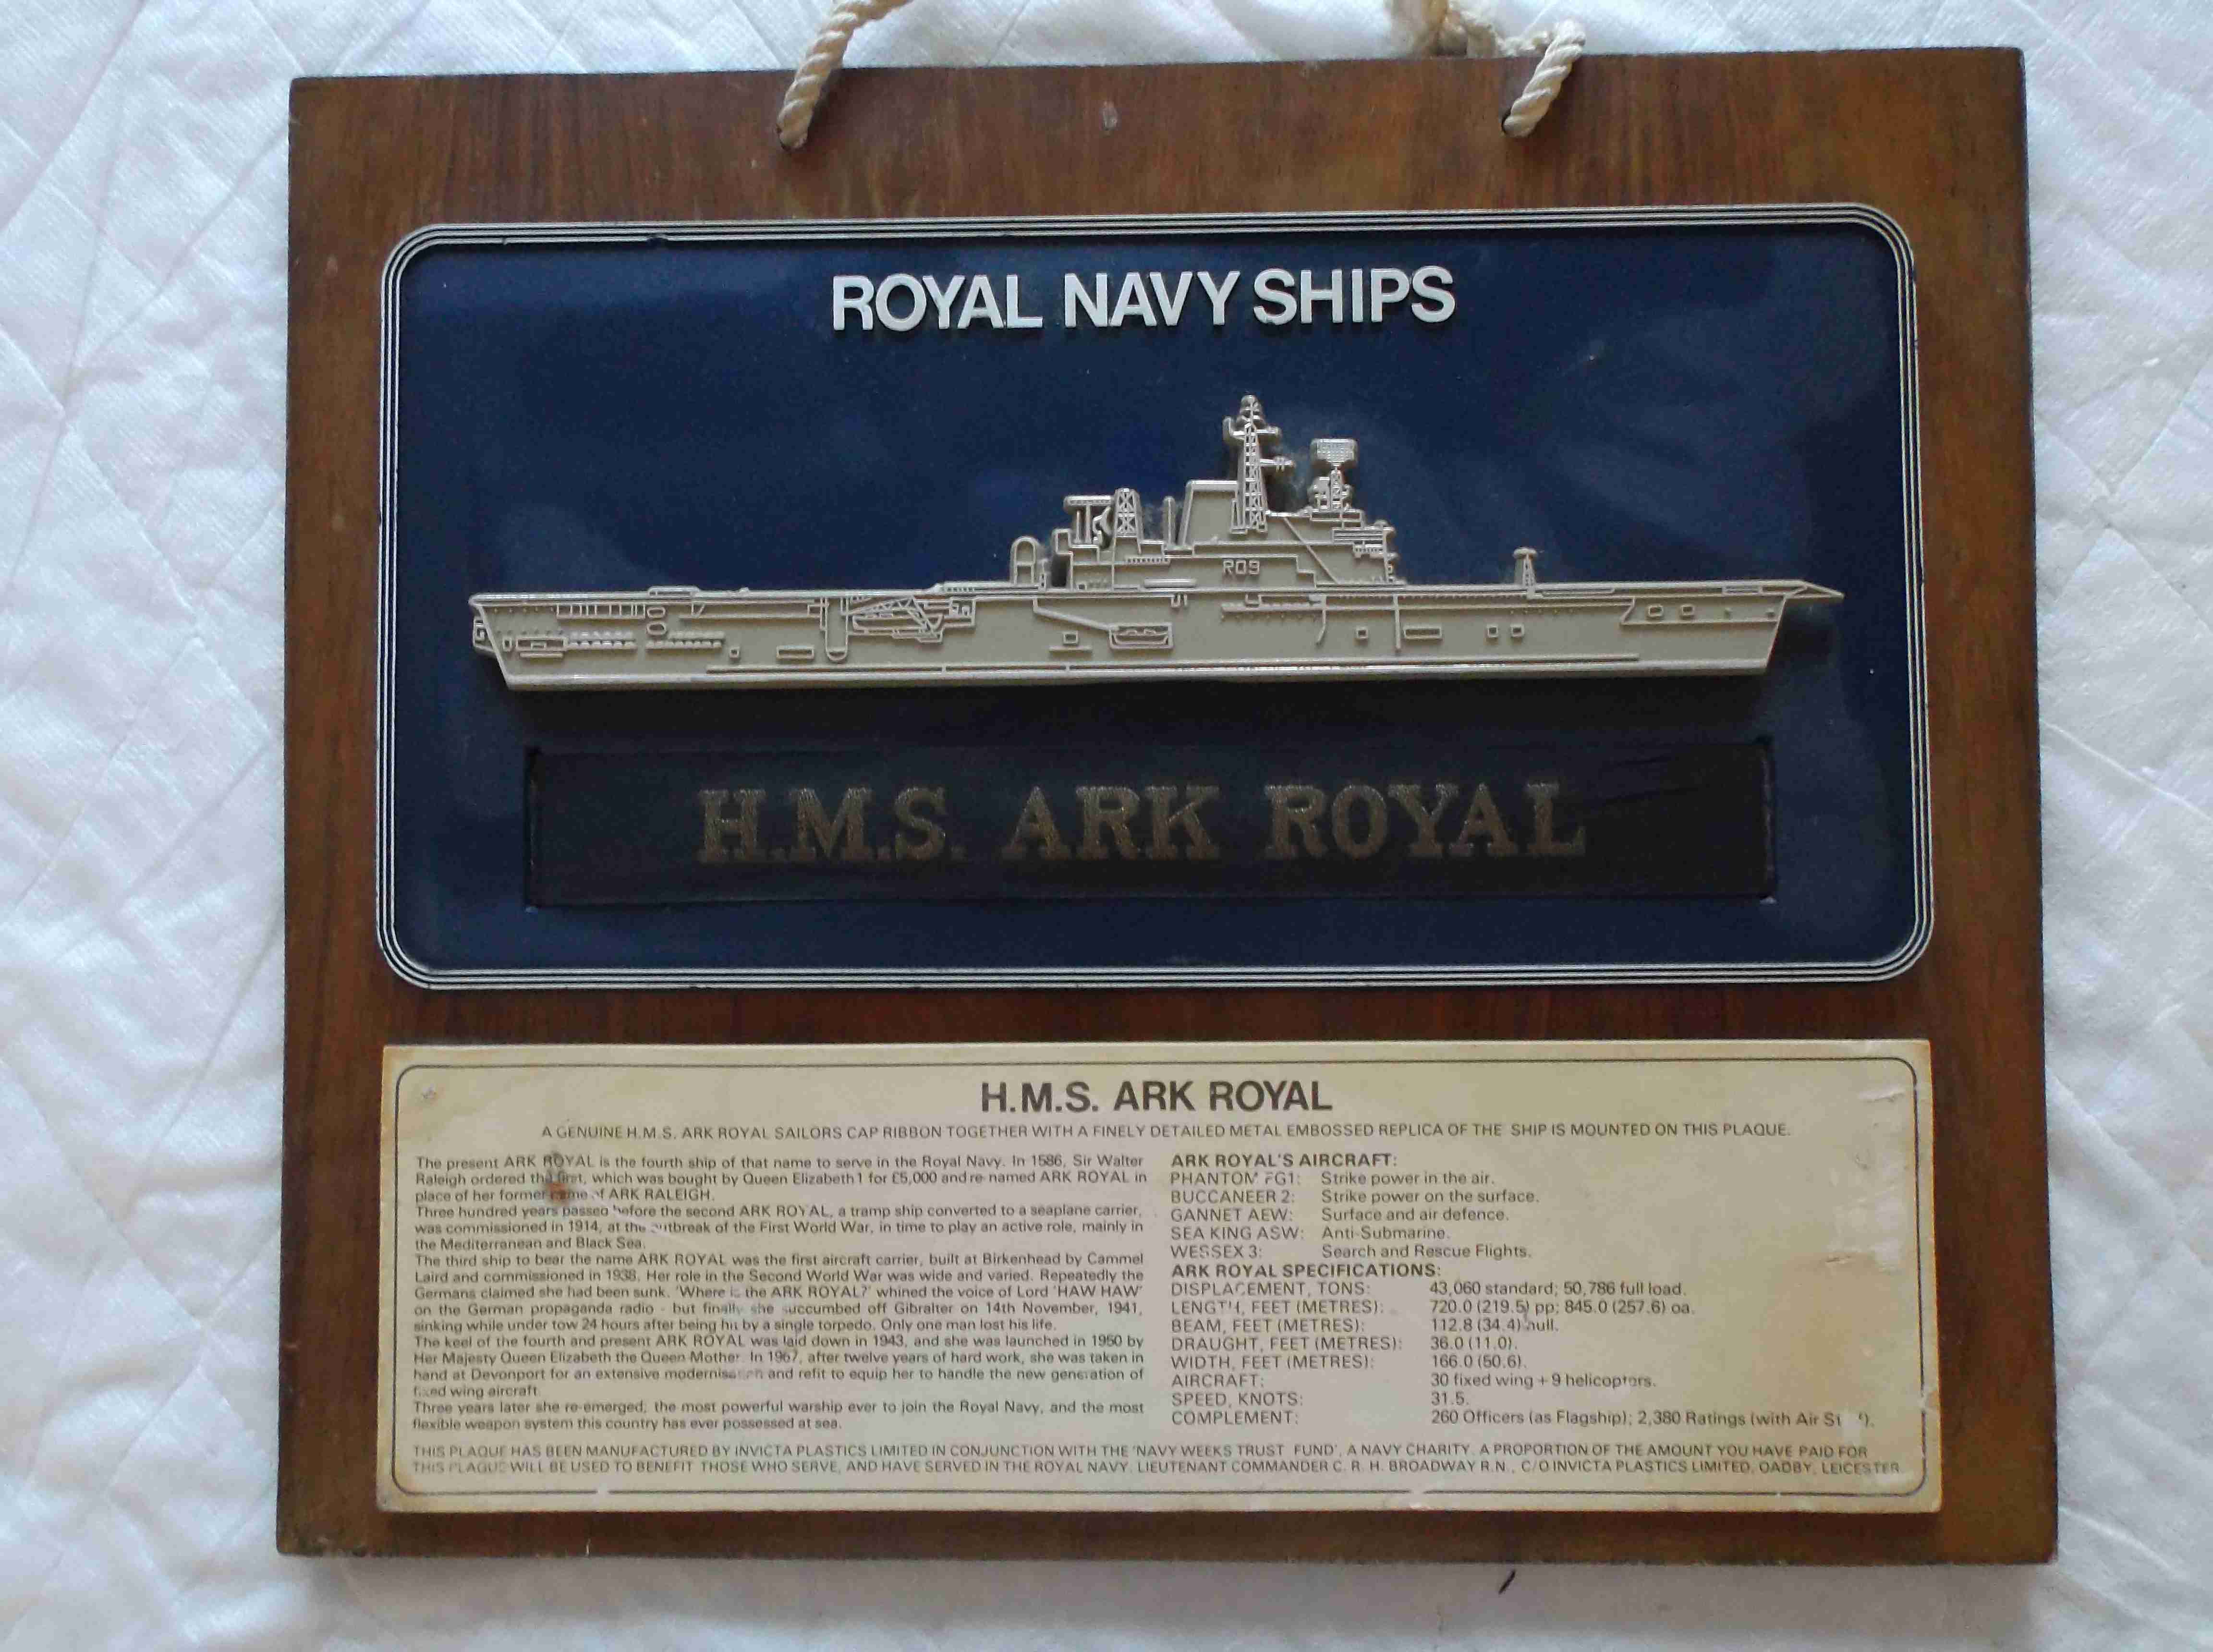 PRESENTATION PLAQUE FOR THE ROYAL NAVAL VESSEL HMS ARK ROYAL